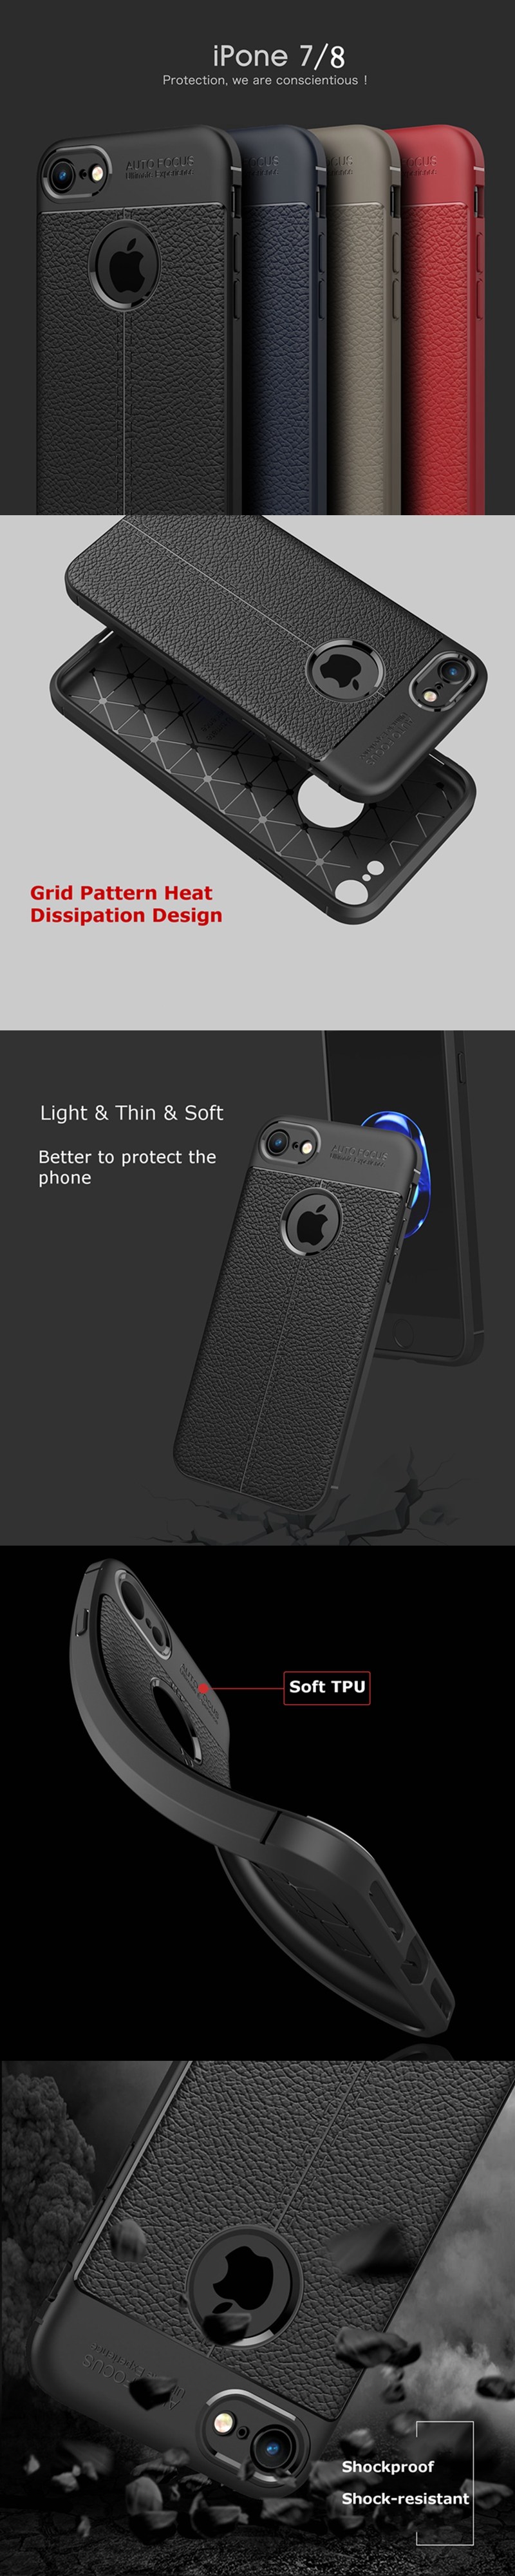 Bakeeytrade-Anti-Fingerprint-Soft-TPU-Litchi-Leather-Case-Cover-for-iPhone-X787Plus8Plus6Plus6sPlus-1203025-4